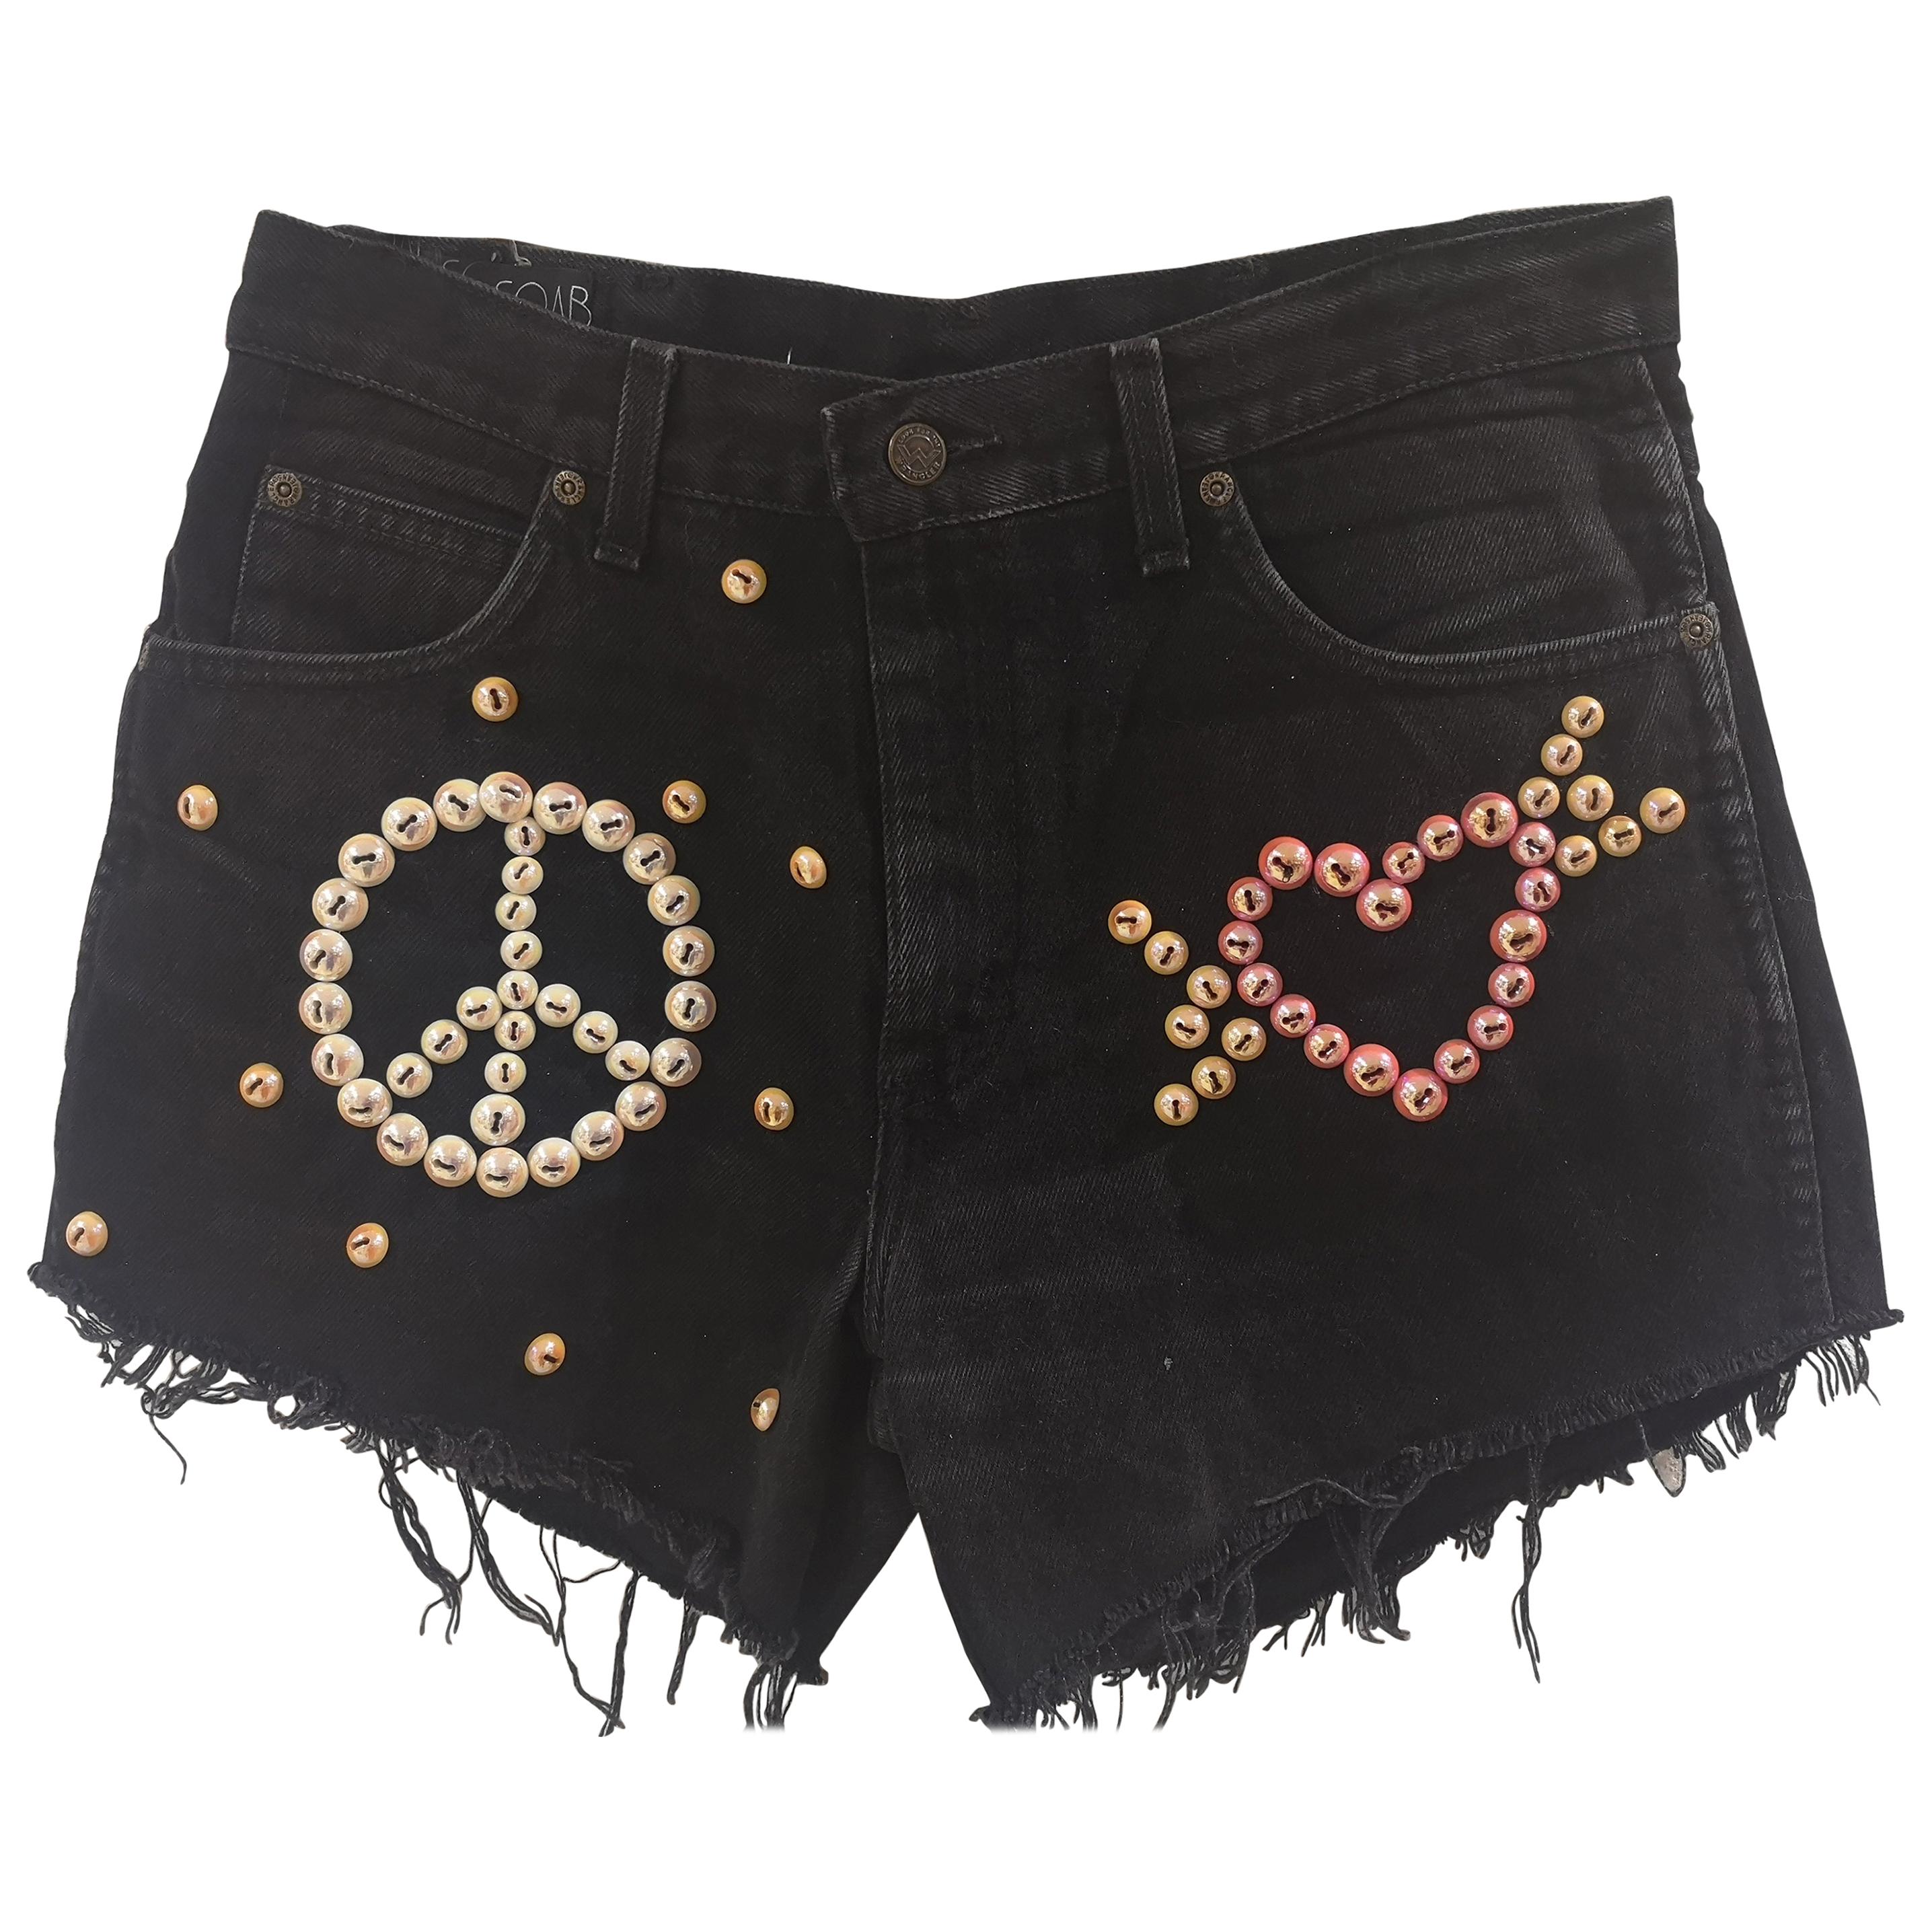 SOAB black cotton beads shorts